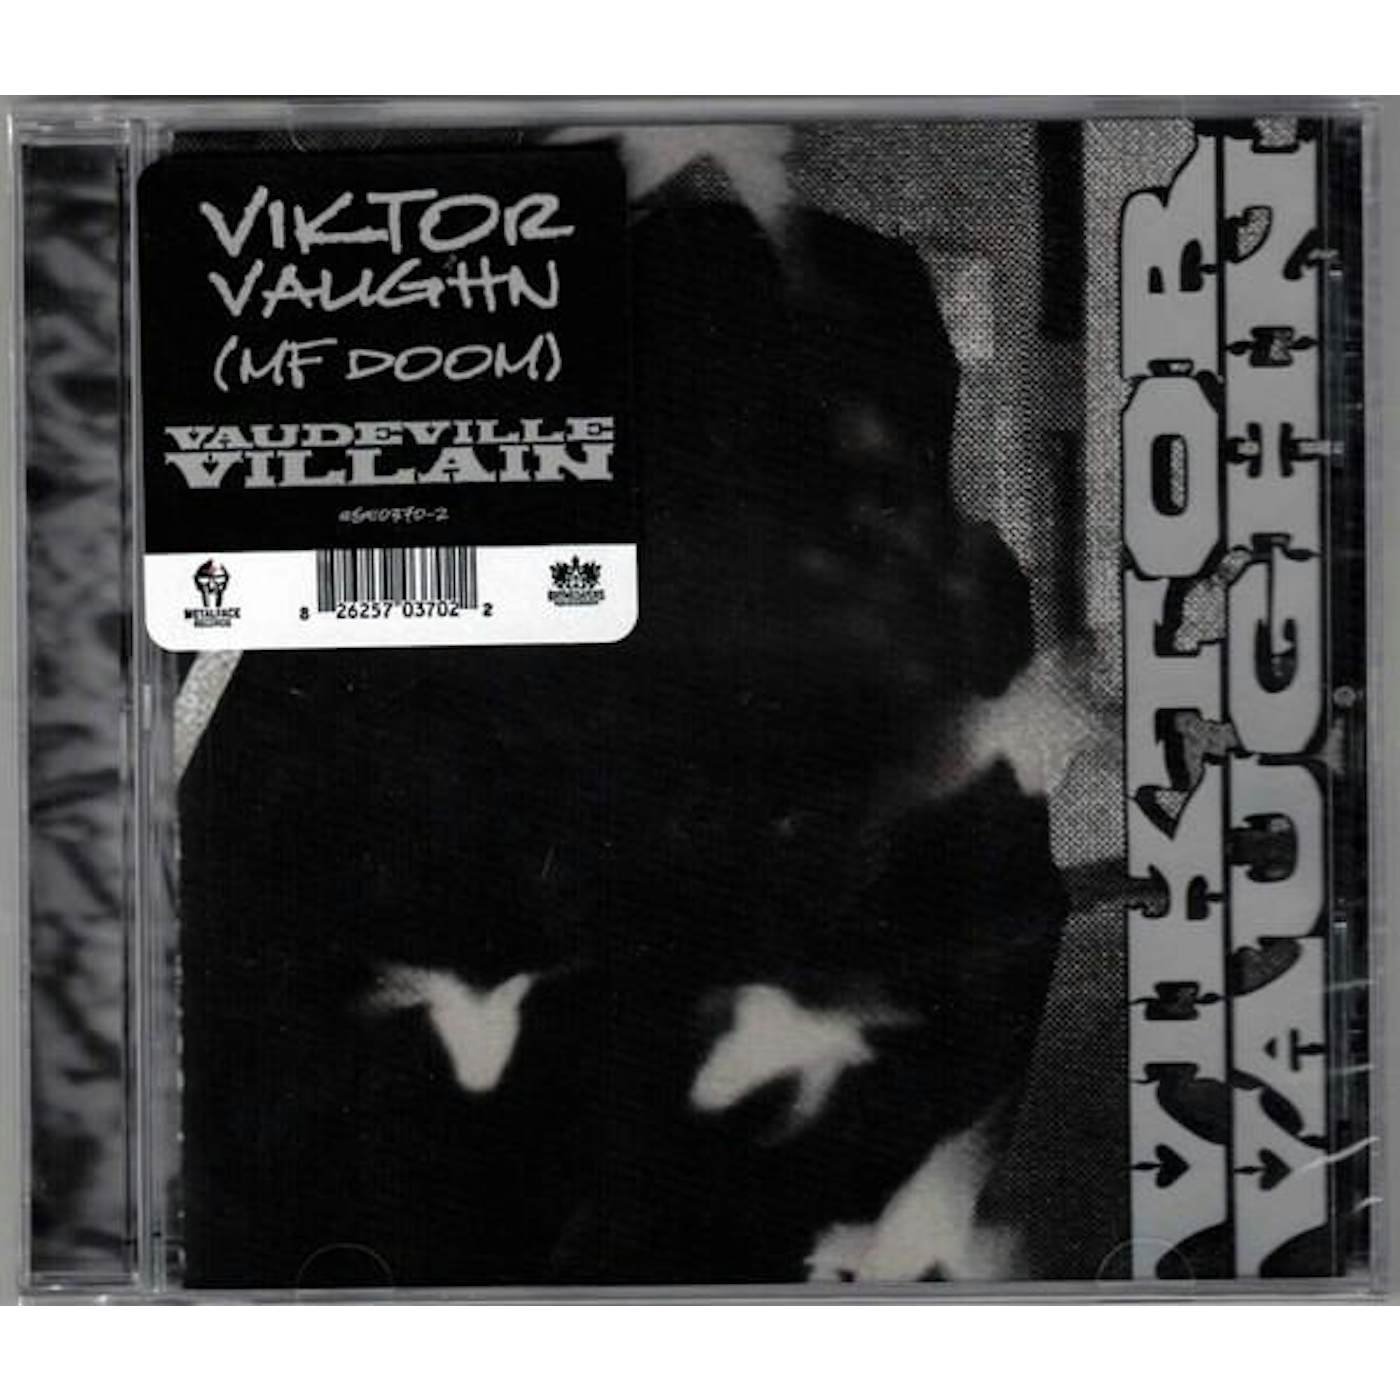 Viktor Vaughn VAUDEVILLE VILLAIN CD